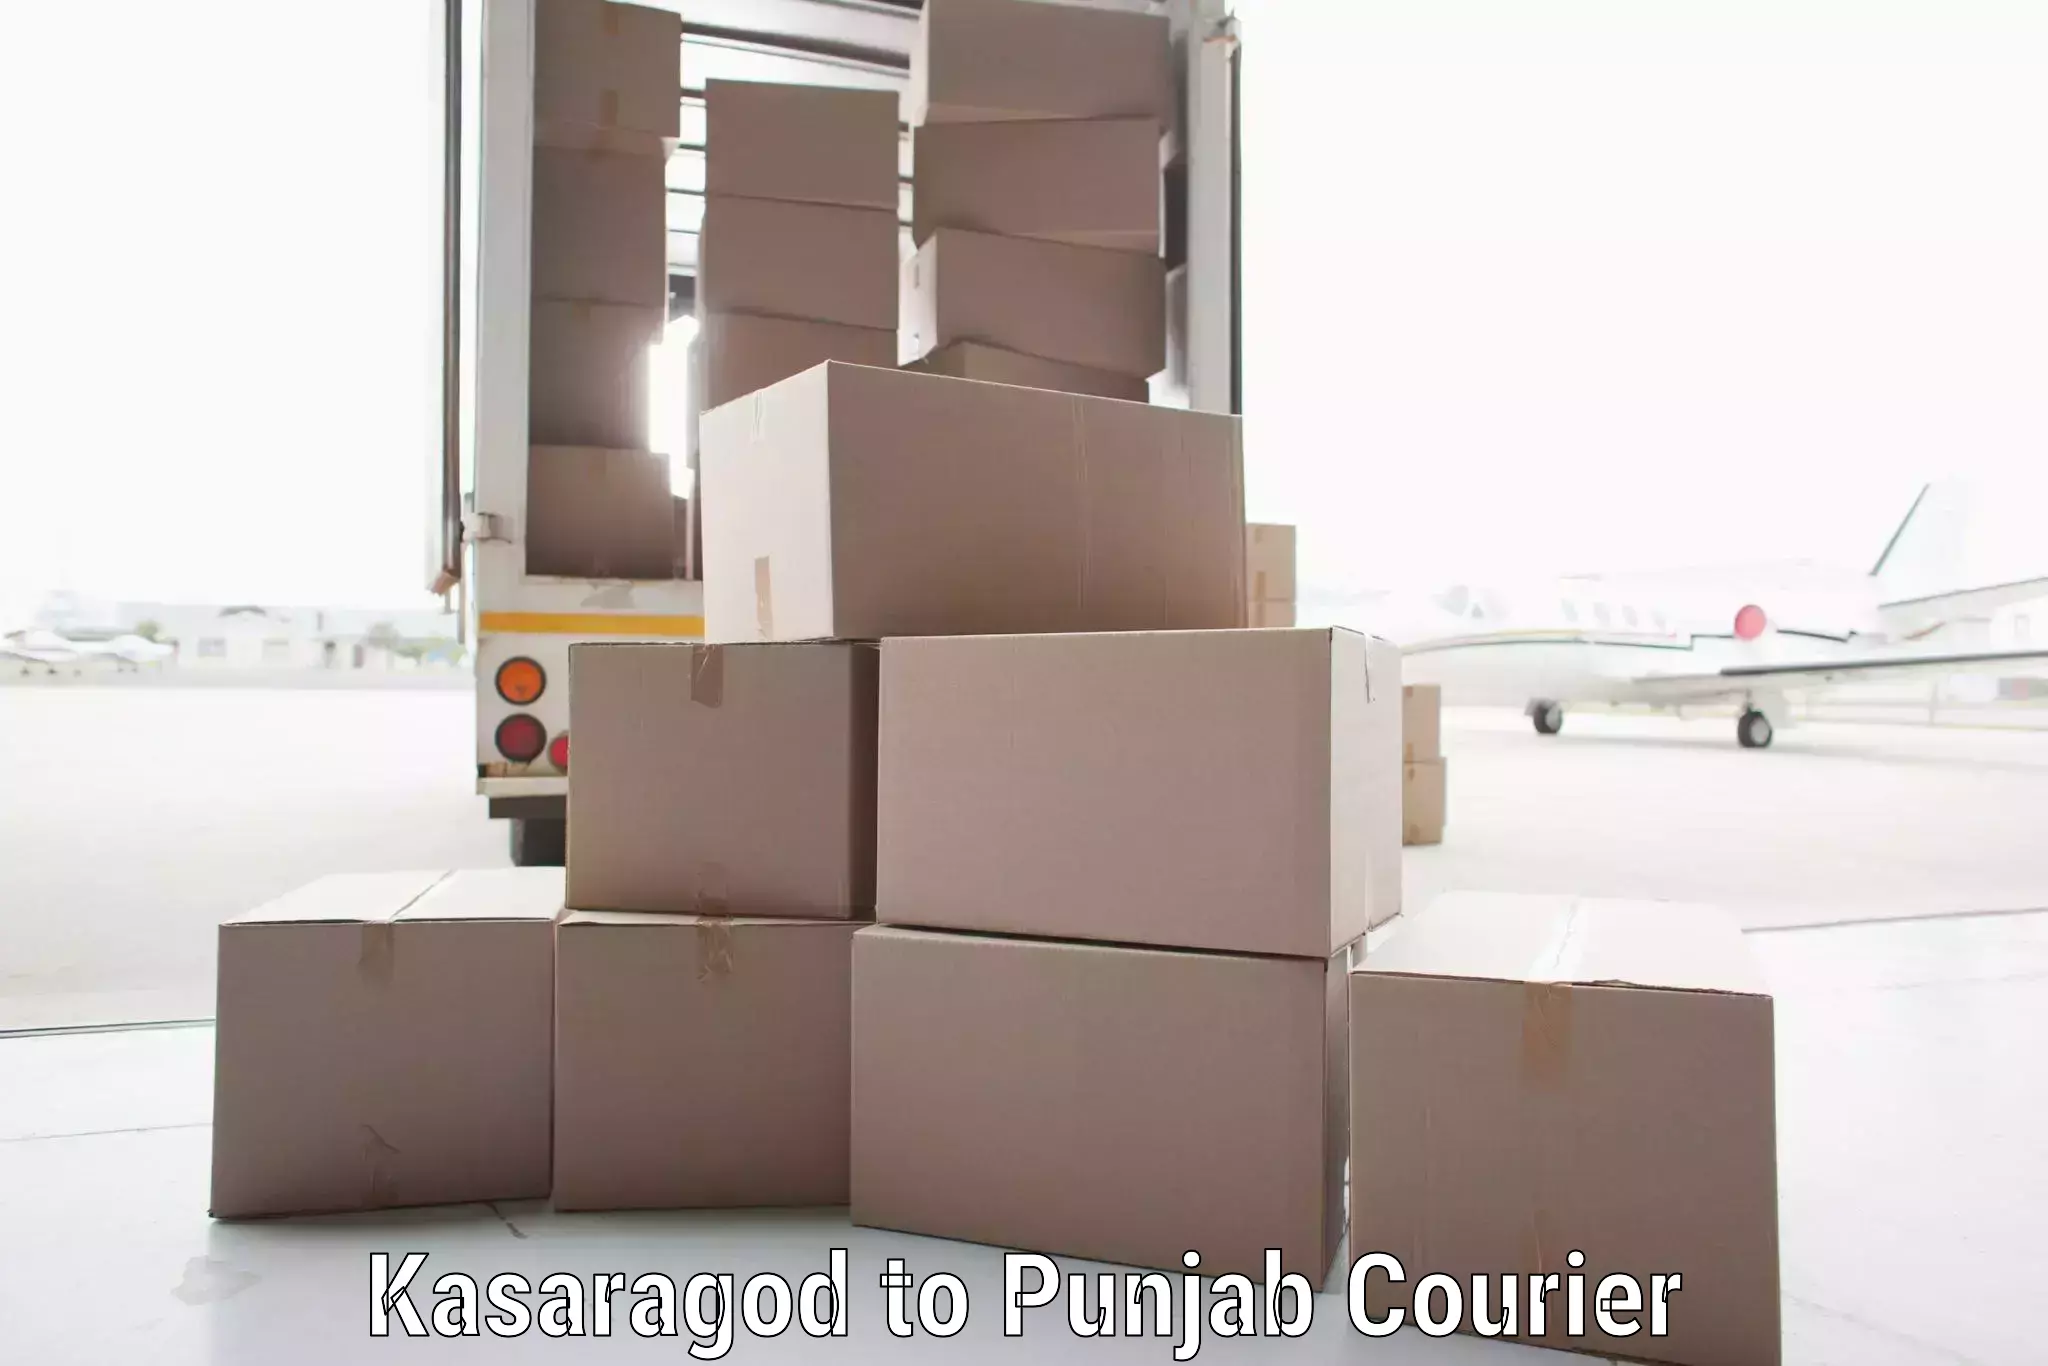 Express postal services in Kasaragod to Punjab